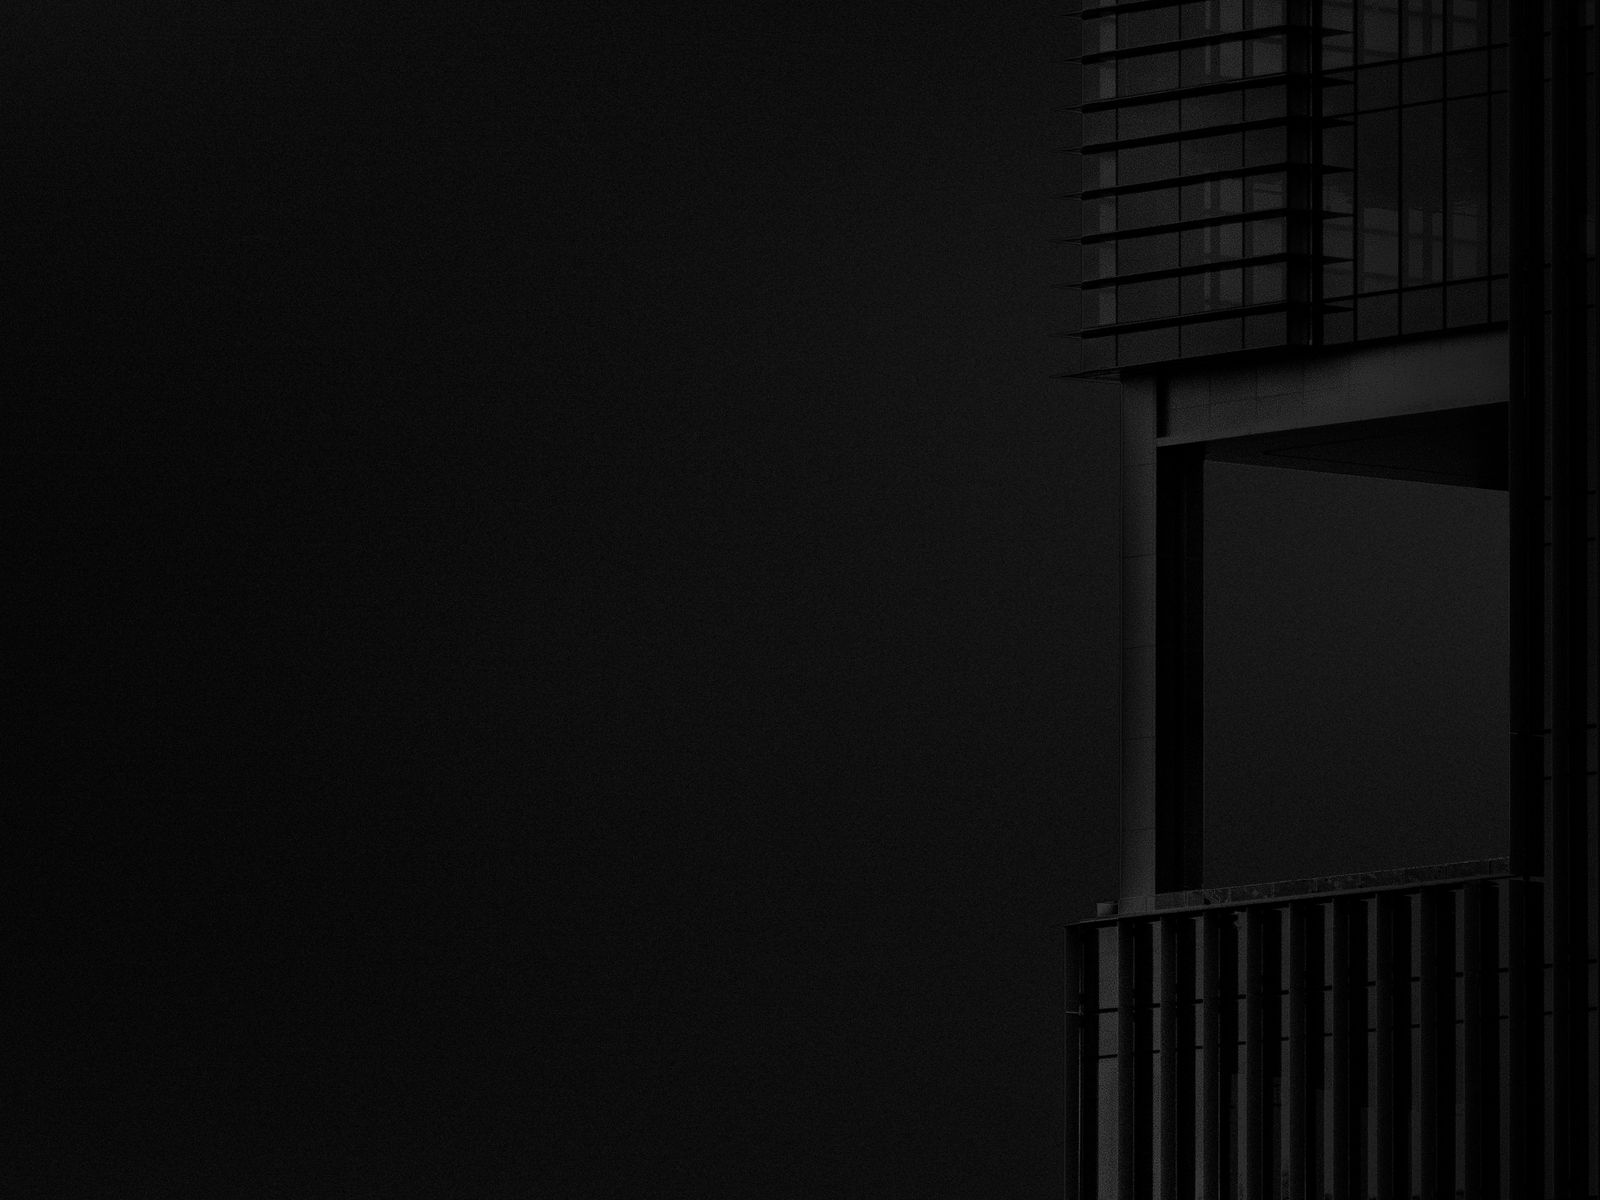 Download wallpaper 1600x1200 building, minimalism, bw, black, dark,  architecture standard 4:3 hd background